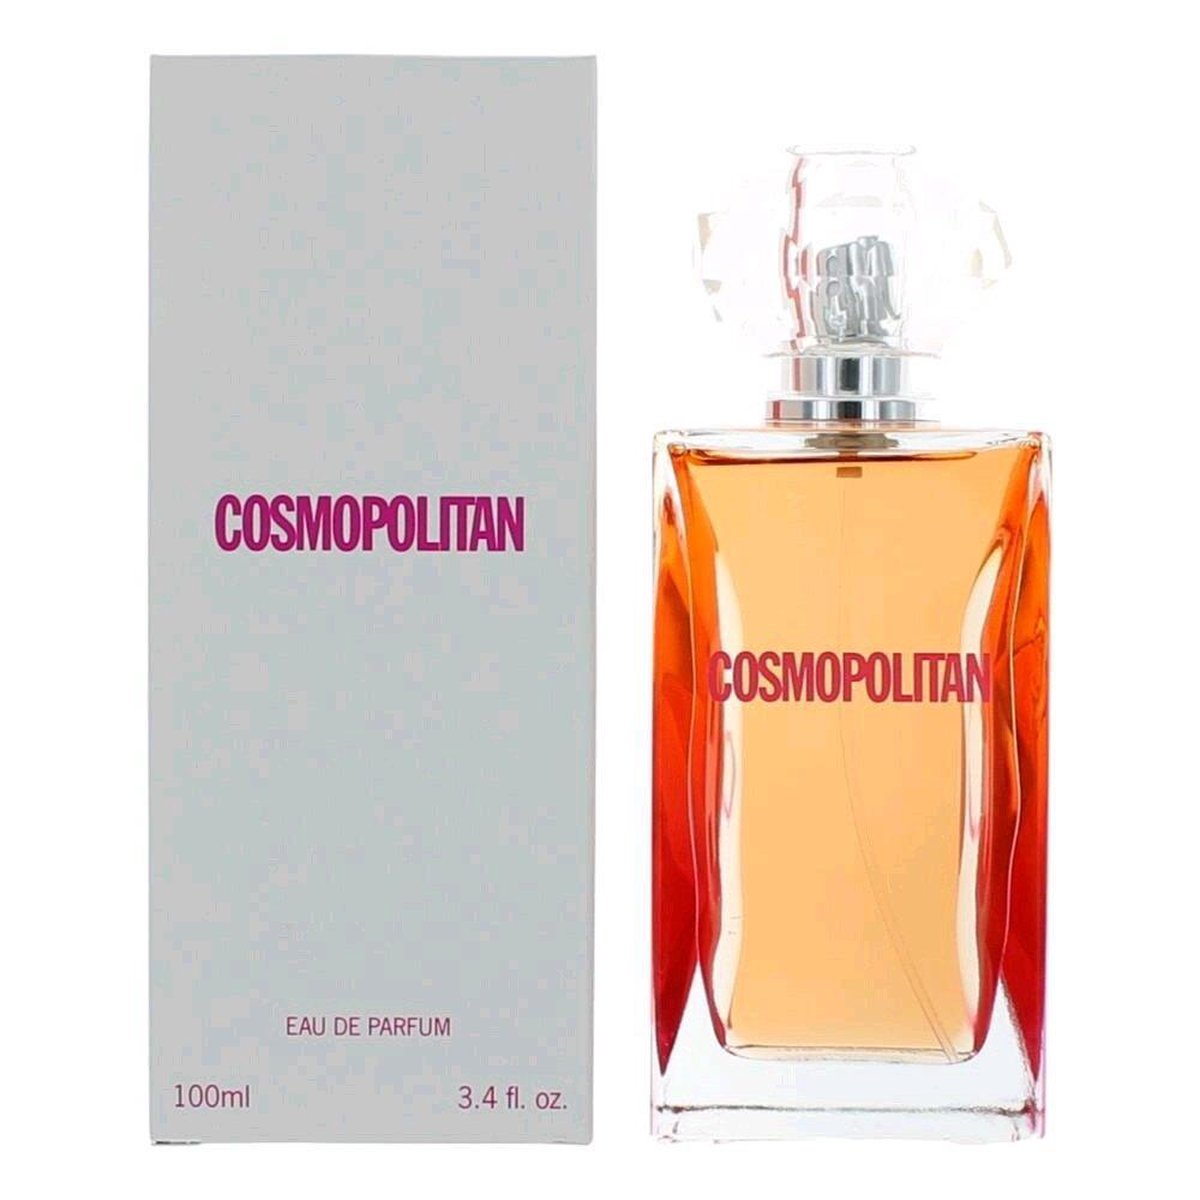 Cosmopolitan - 100ml - Eau de parfum